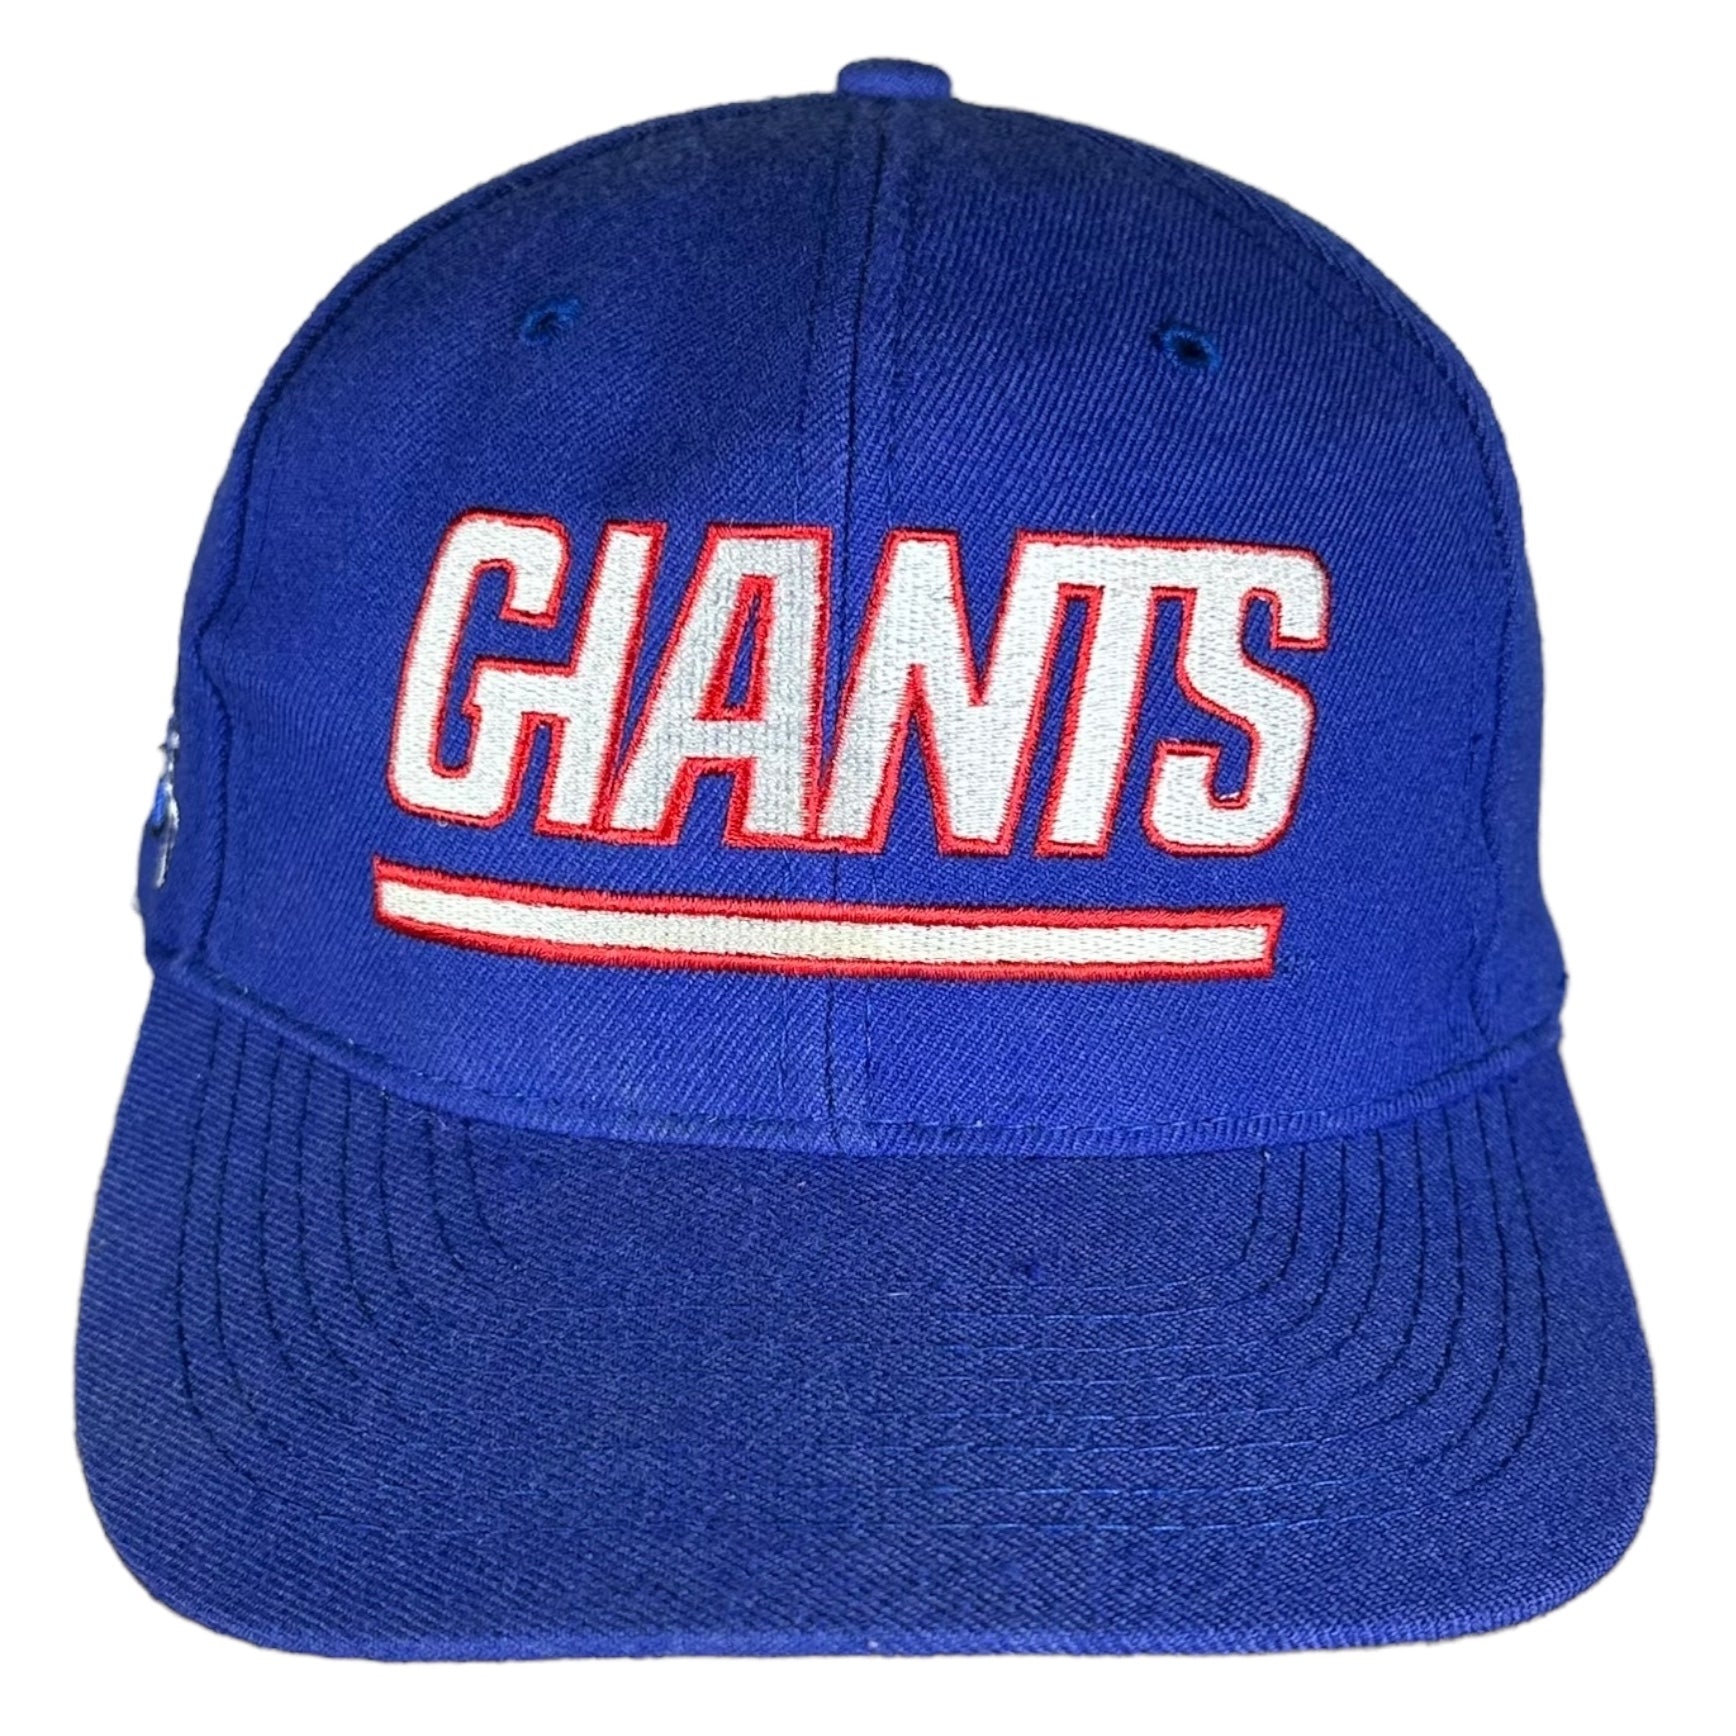 Vintage New York Giants Snapback Hat